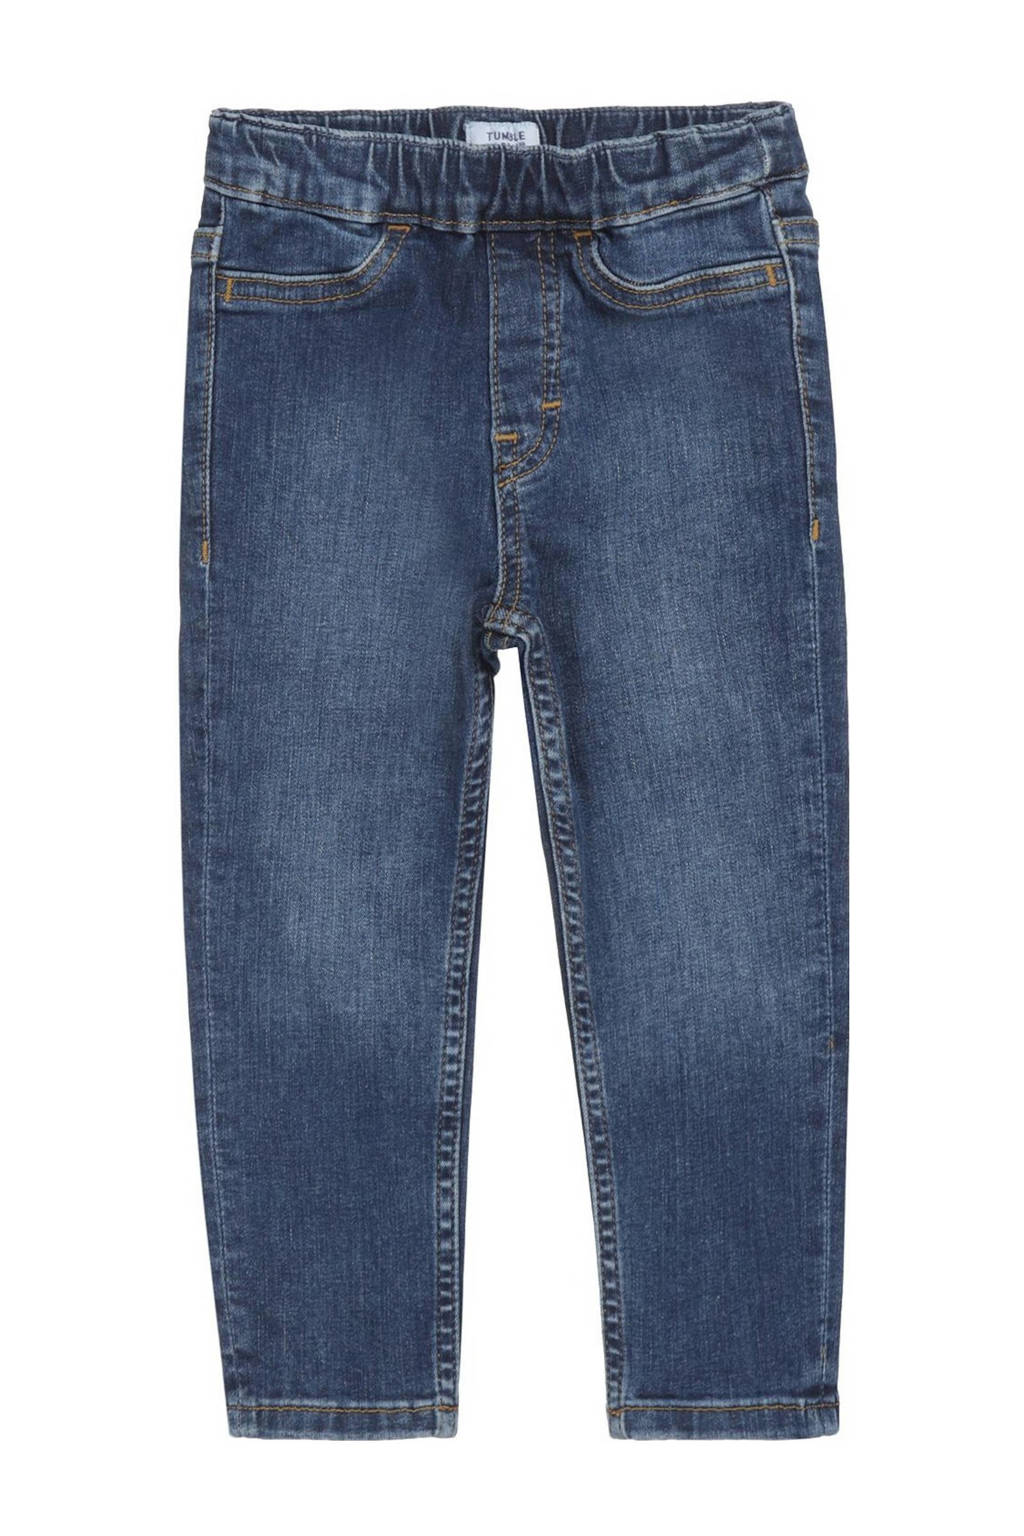 Tumble 'n Dry skinny jeans Didi denim medium stonewash